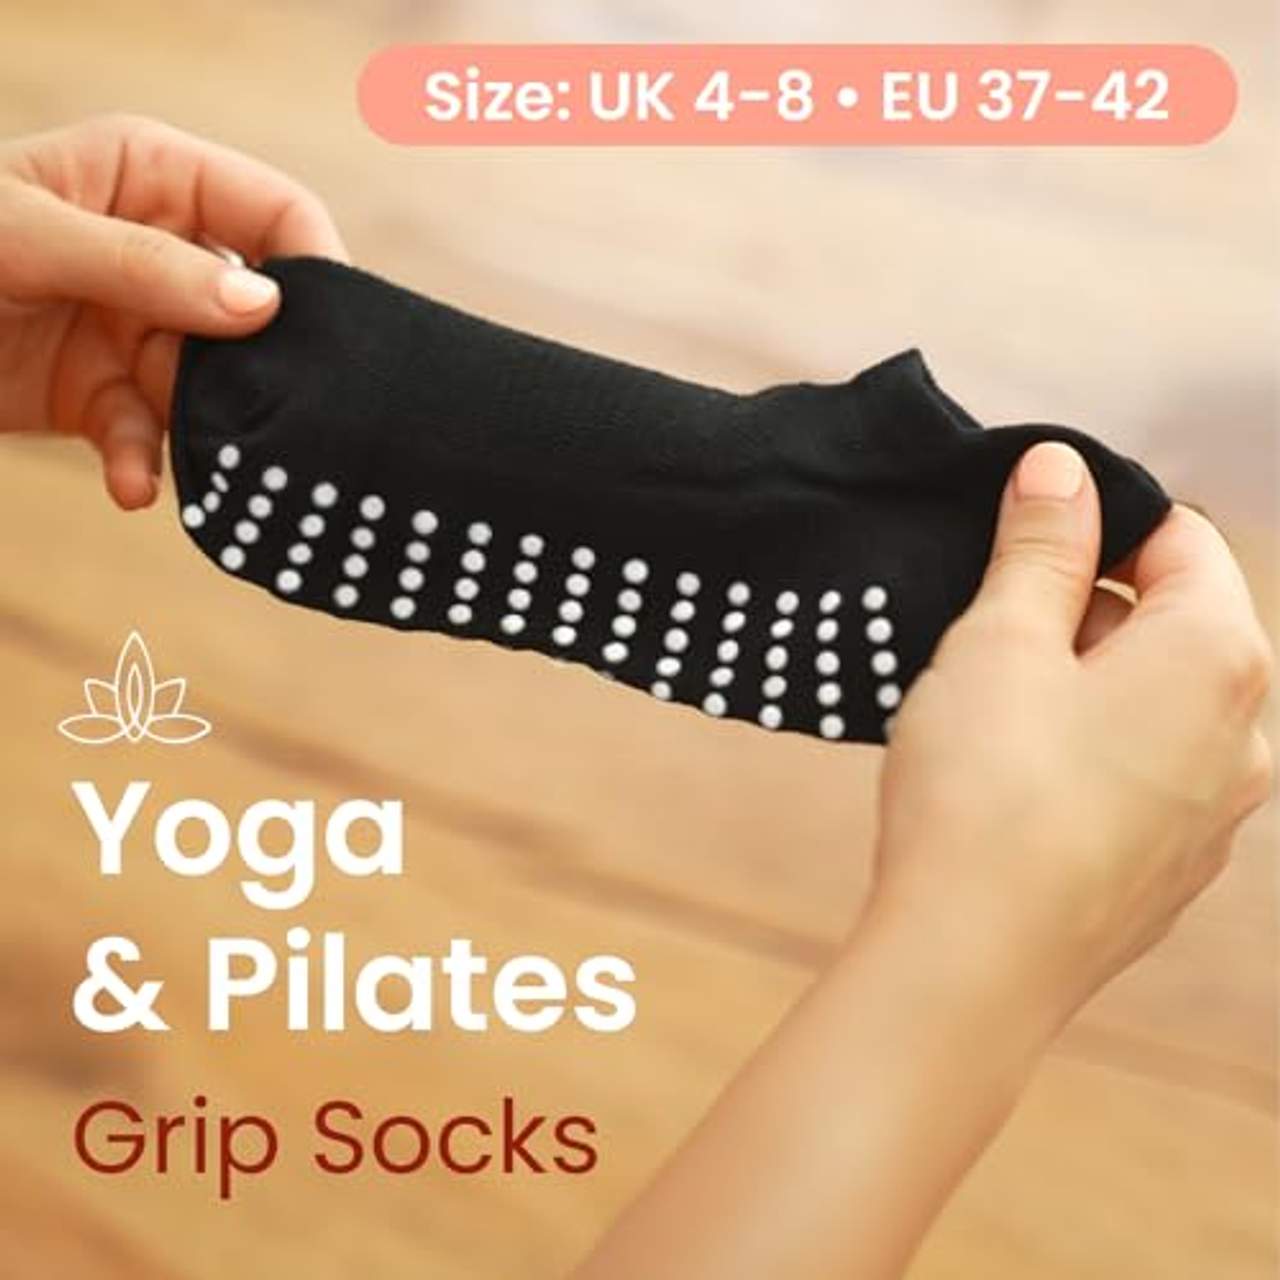 x3 Packung Pilates Socken